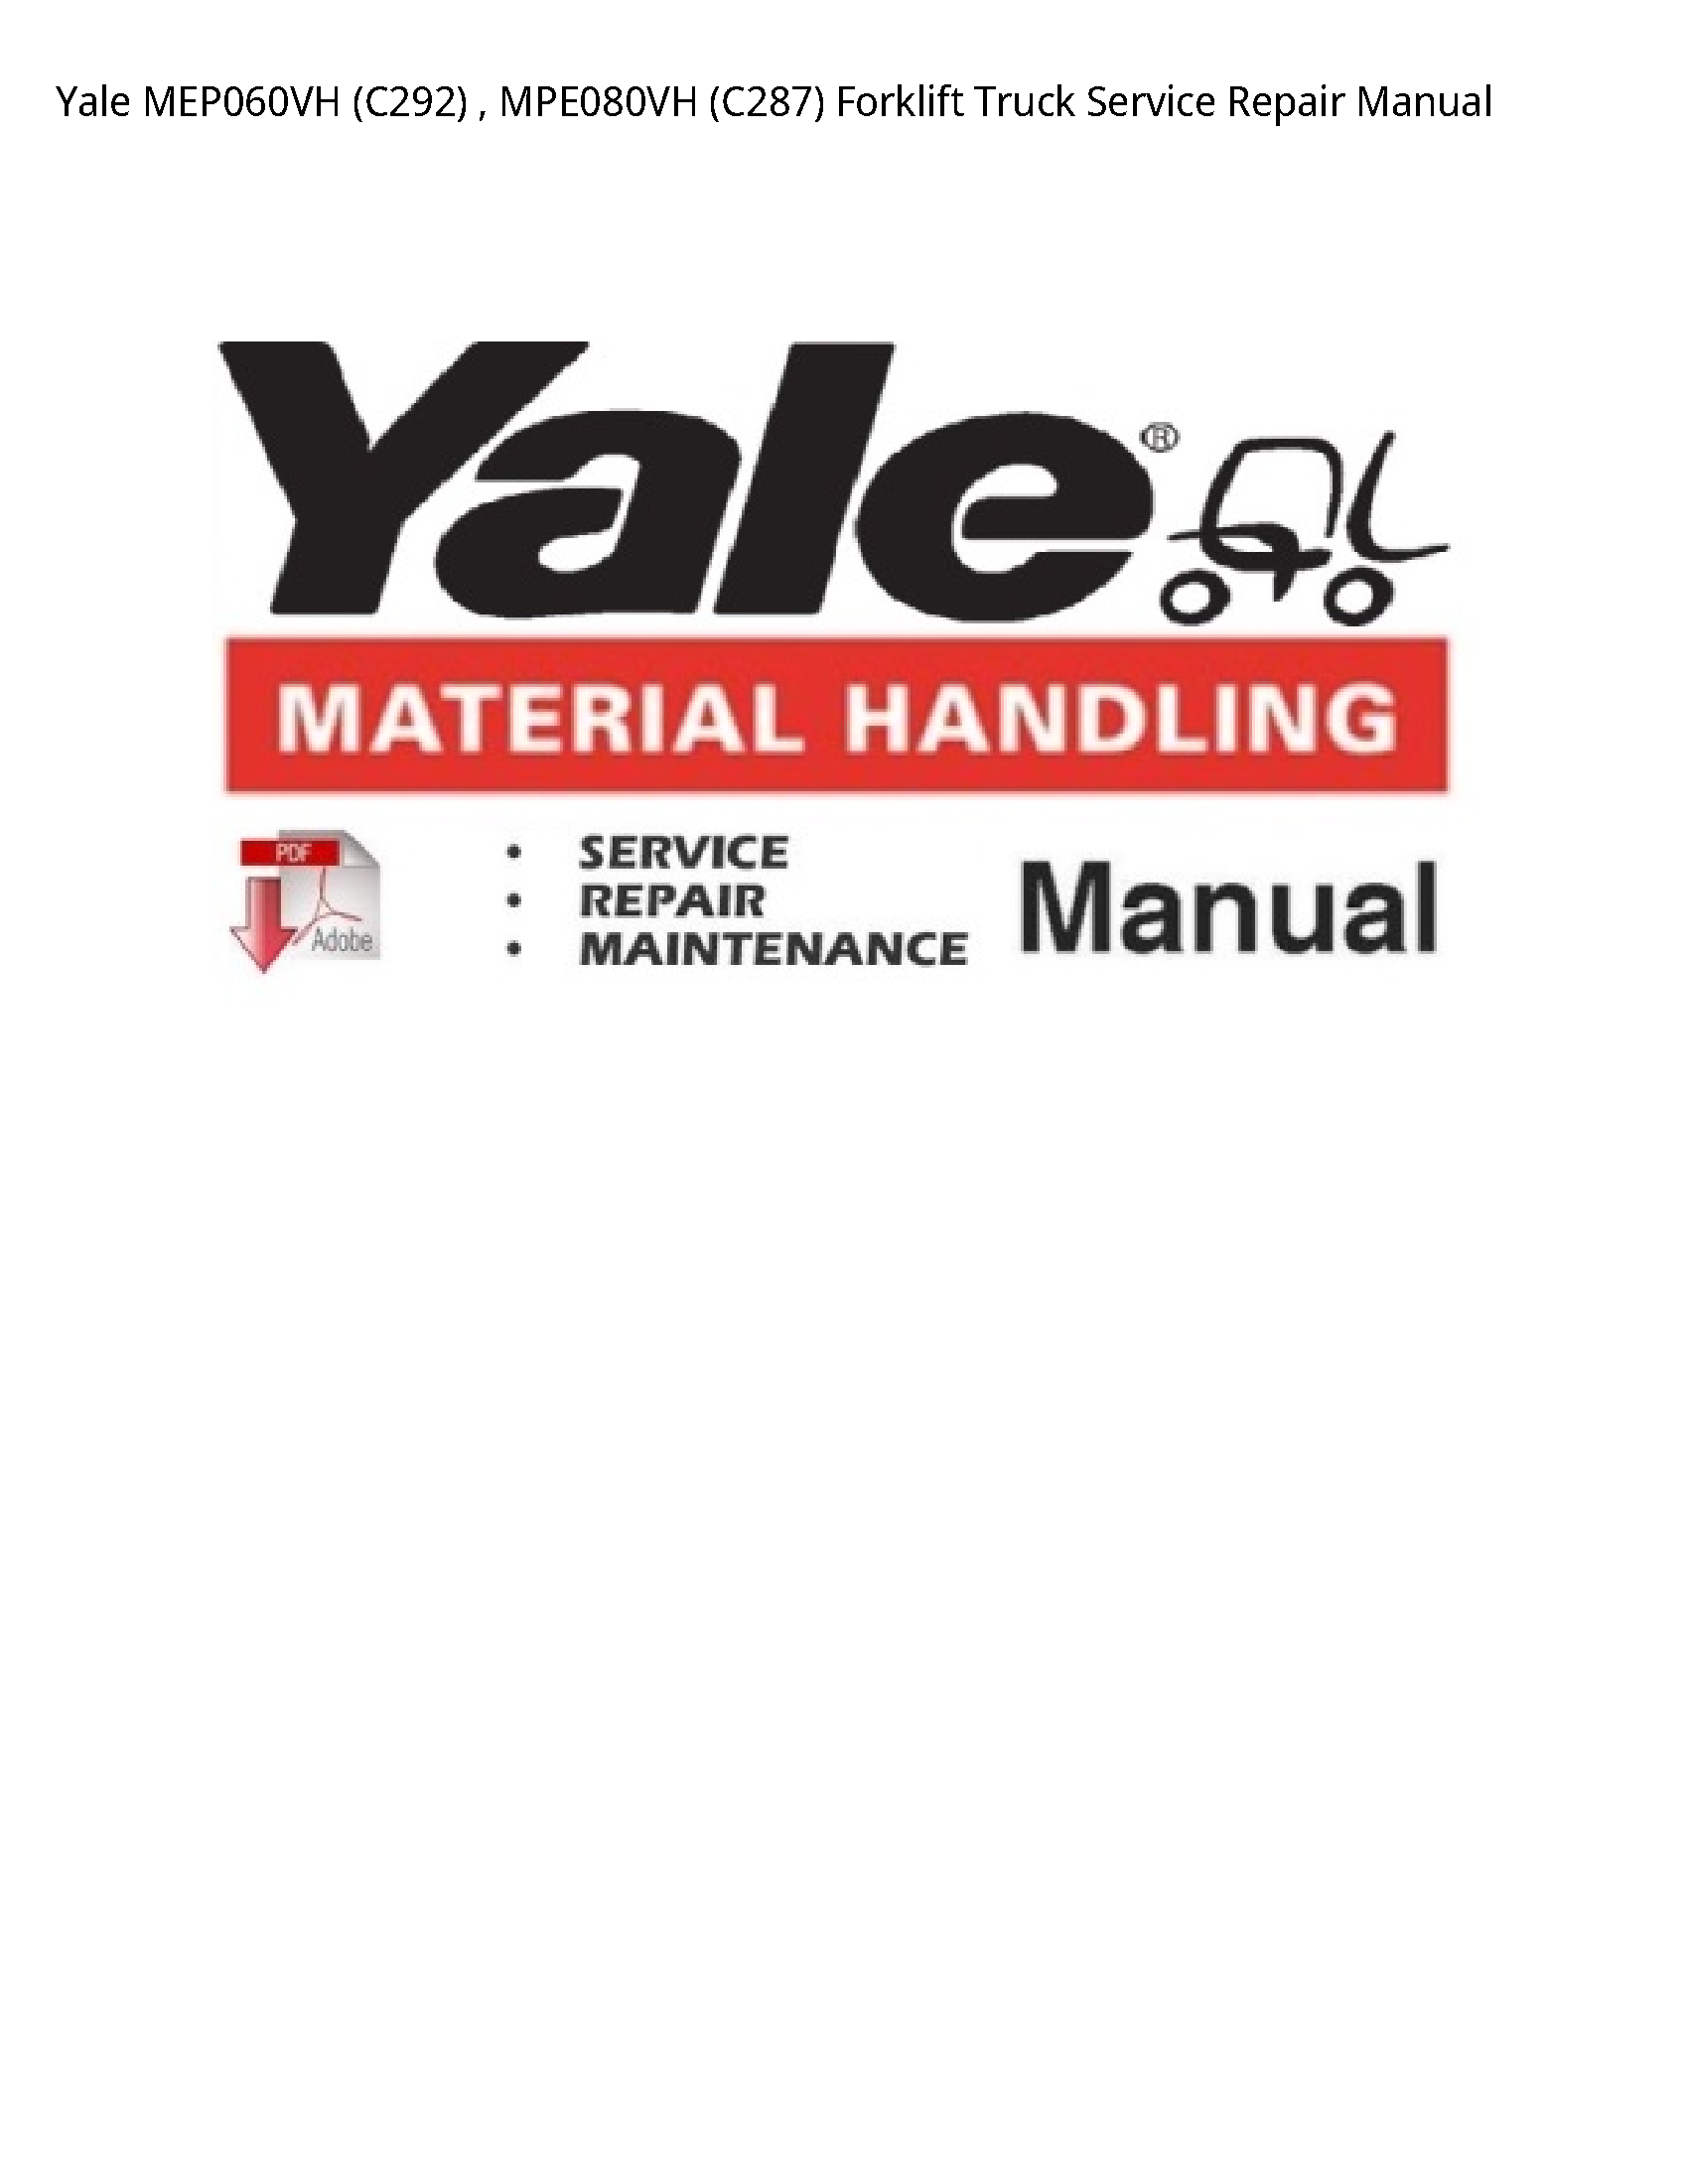 Yale MEP060VH Forklift Truck manual